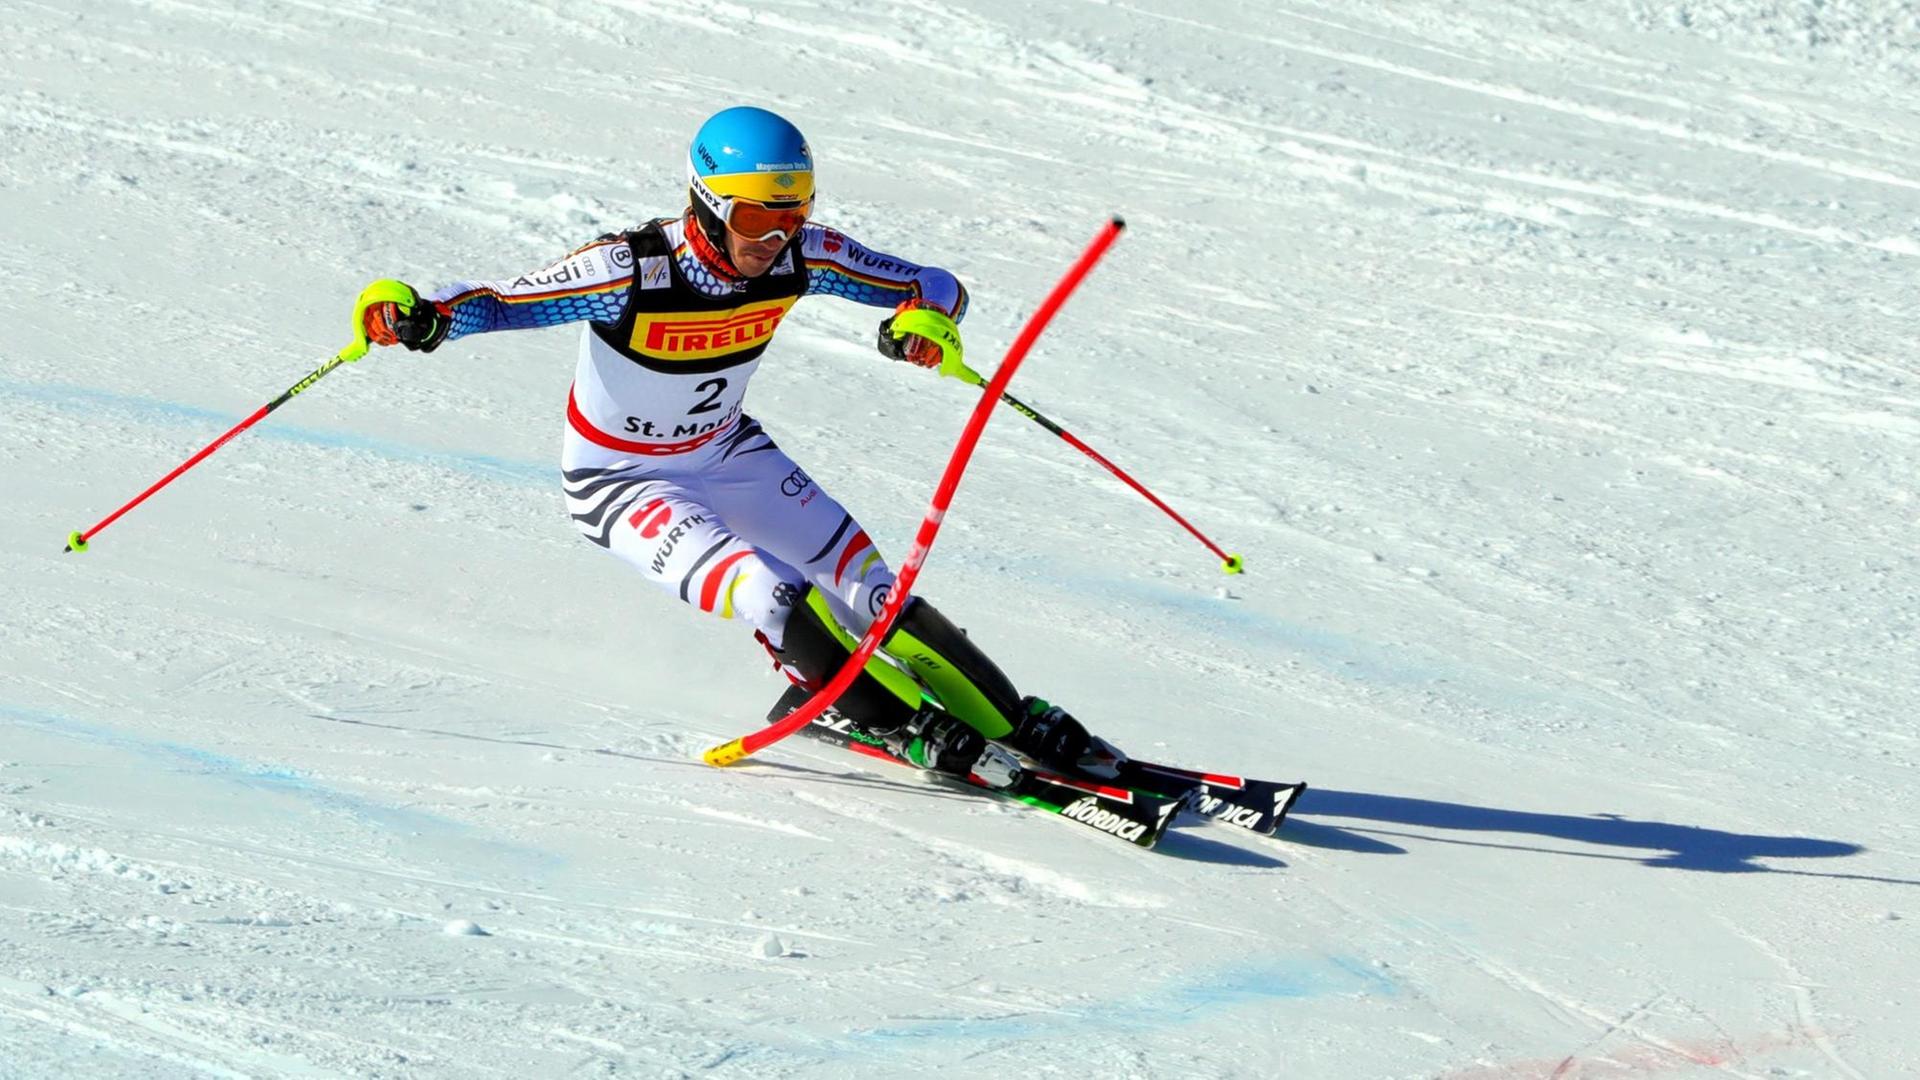 Ski-Fahrer Felix Neureuther auf der Slalom-Piste in St. Moritz (Schweiz).